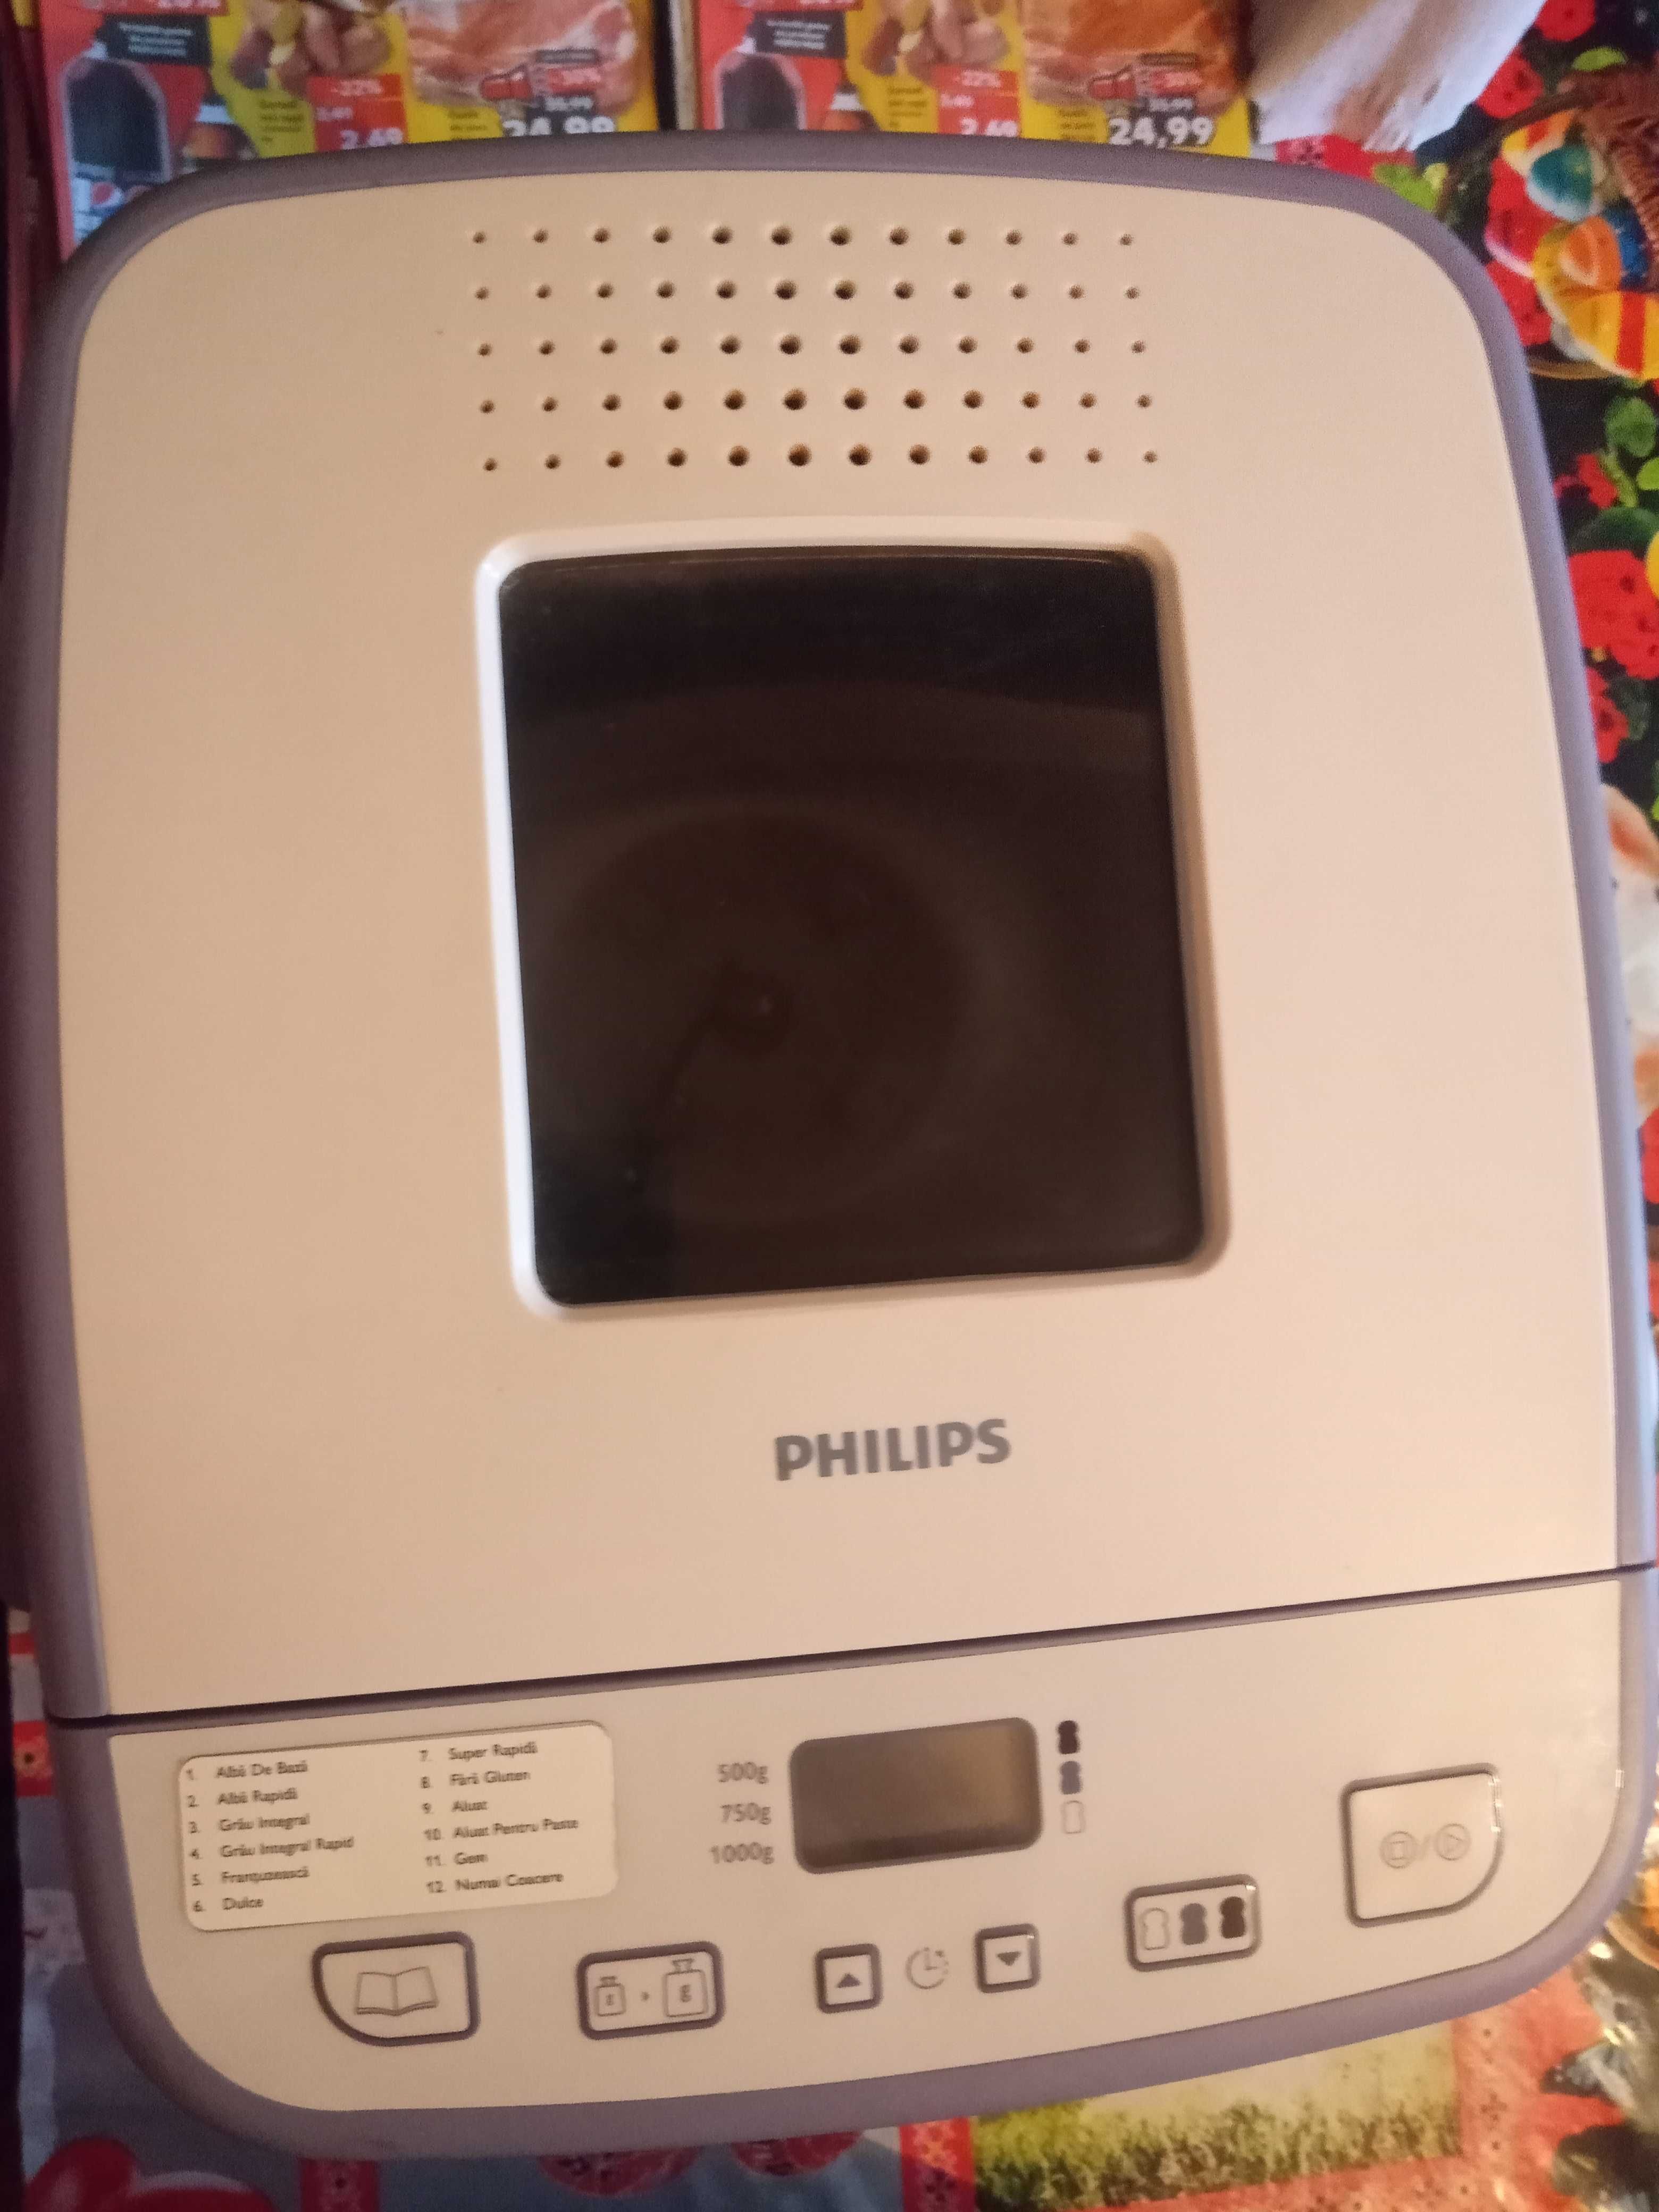 masina Philips pentru paine